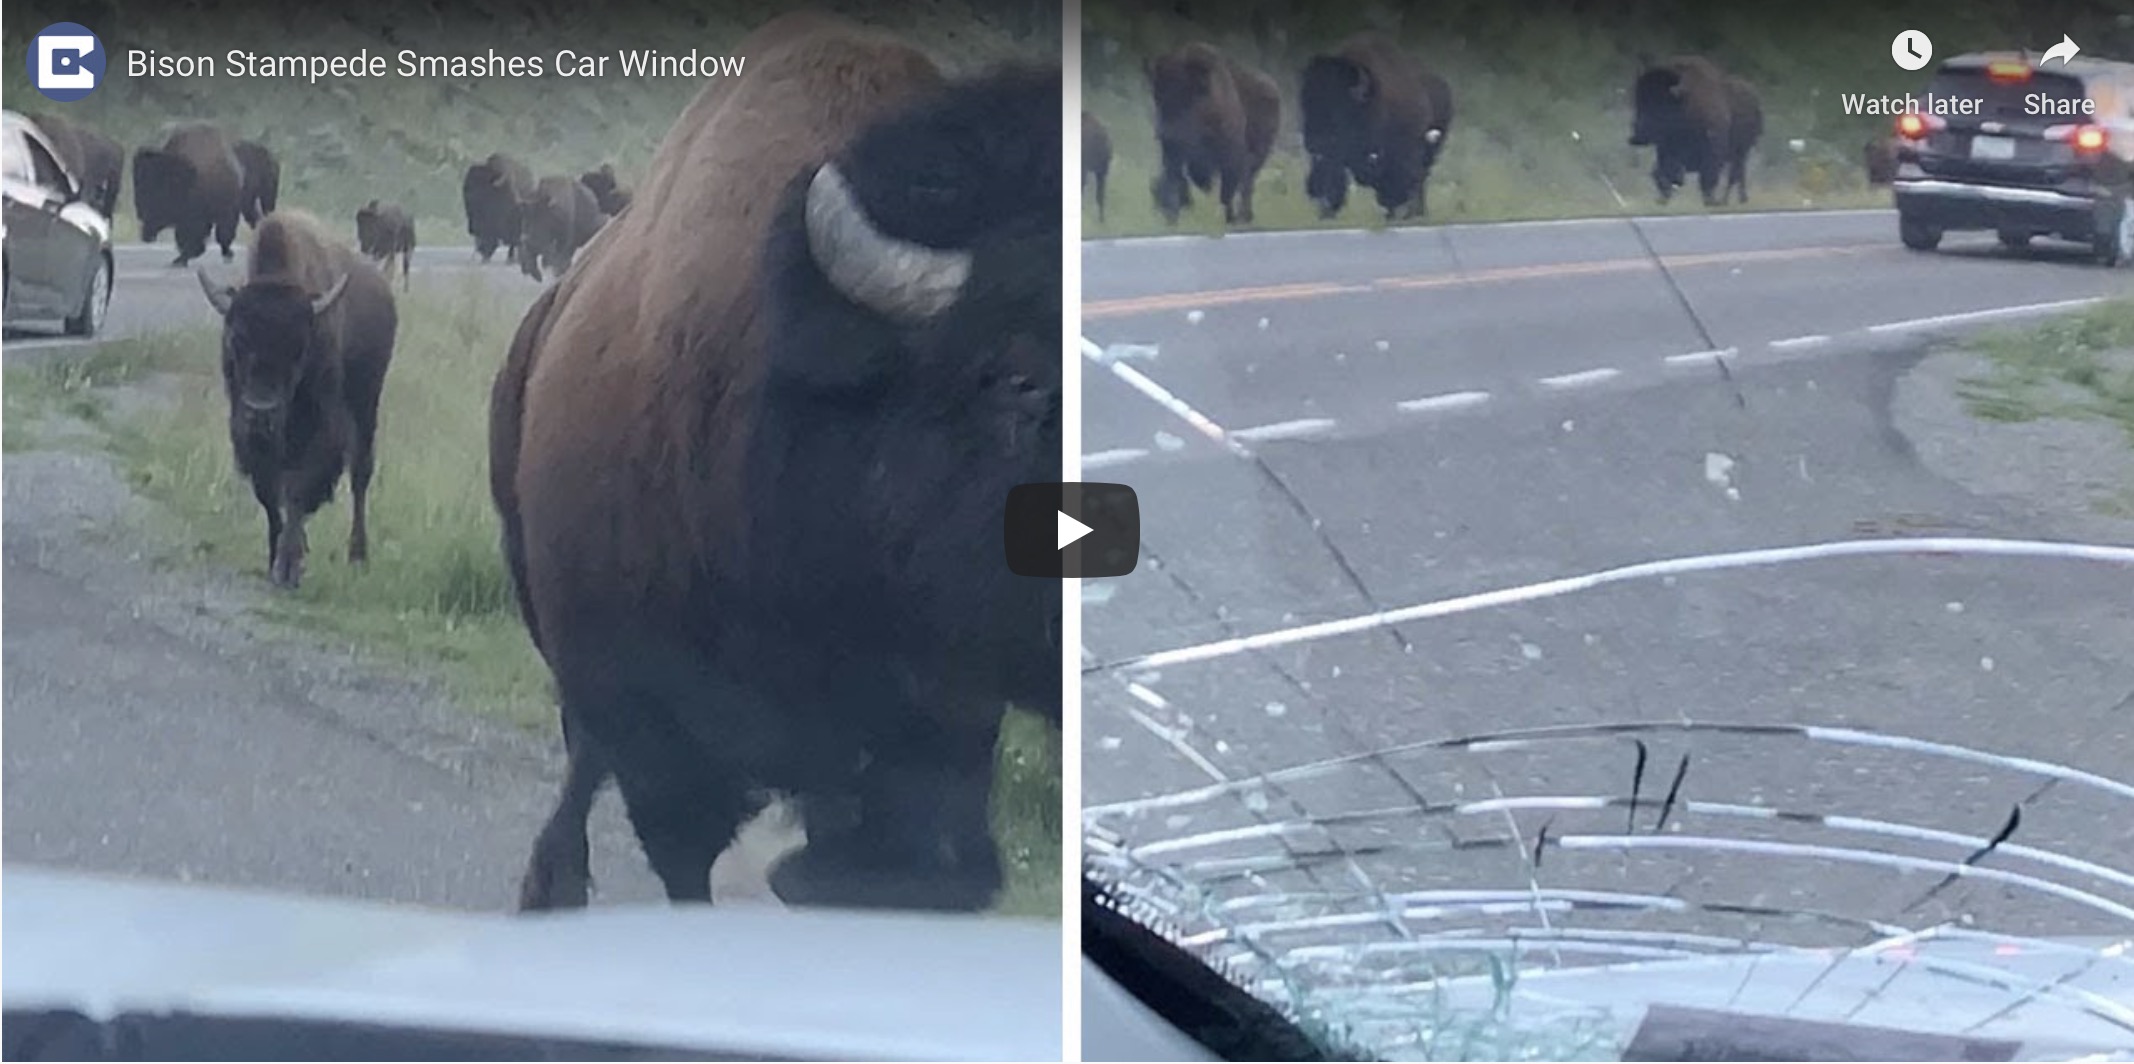 Bison stampede smashes car window